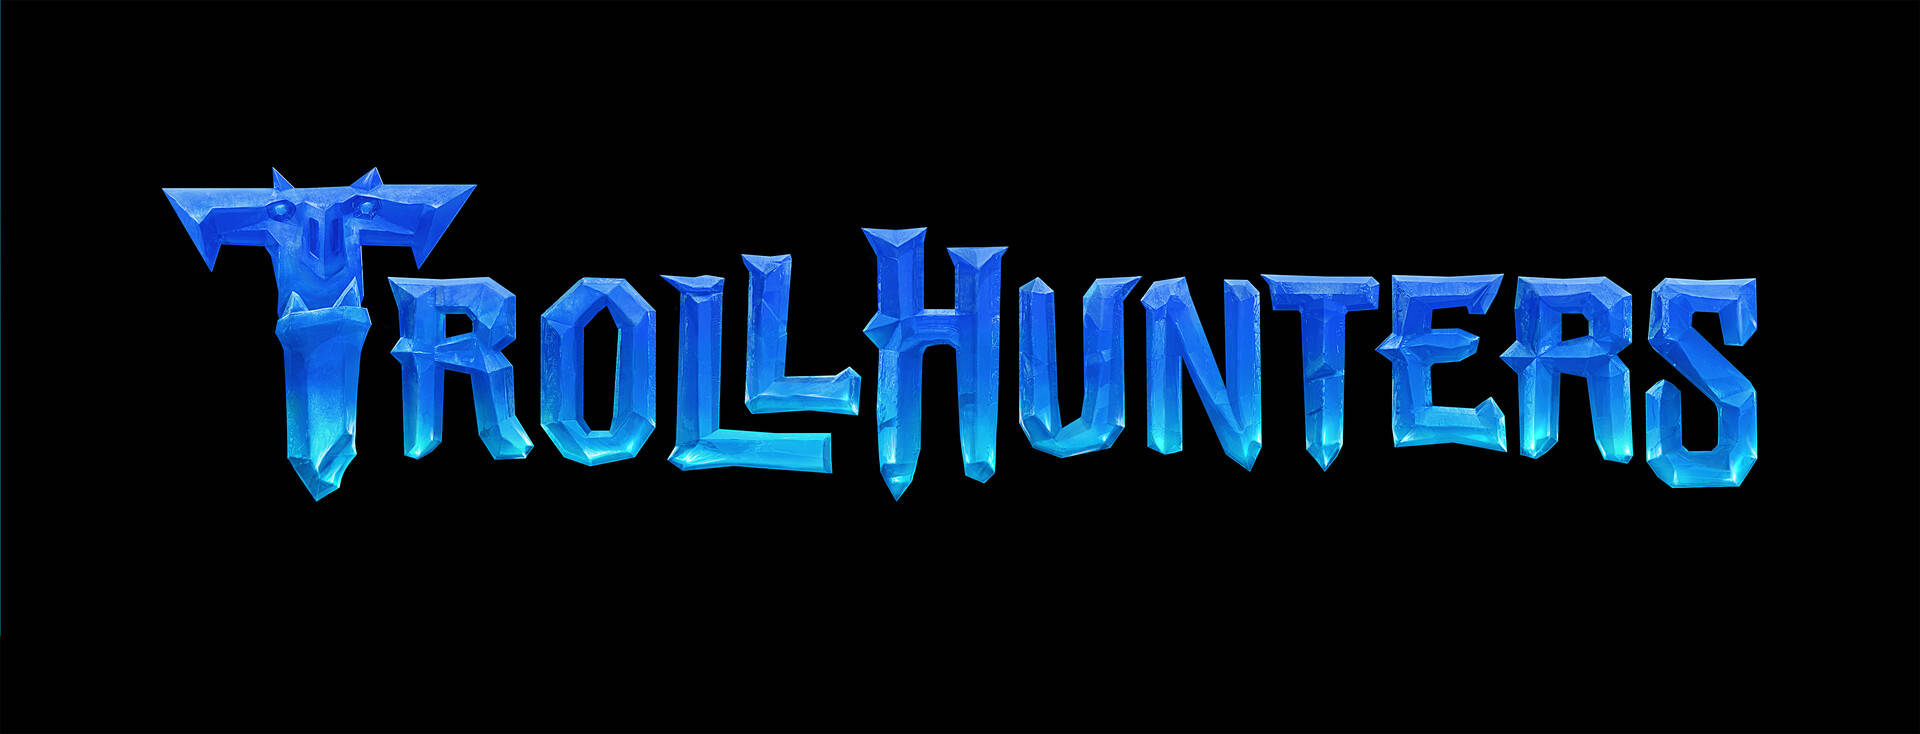 Trollhunters Tales Of Arcadia Blue Logo Background